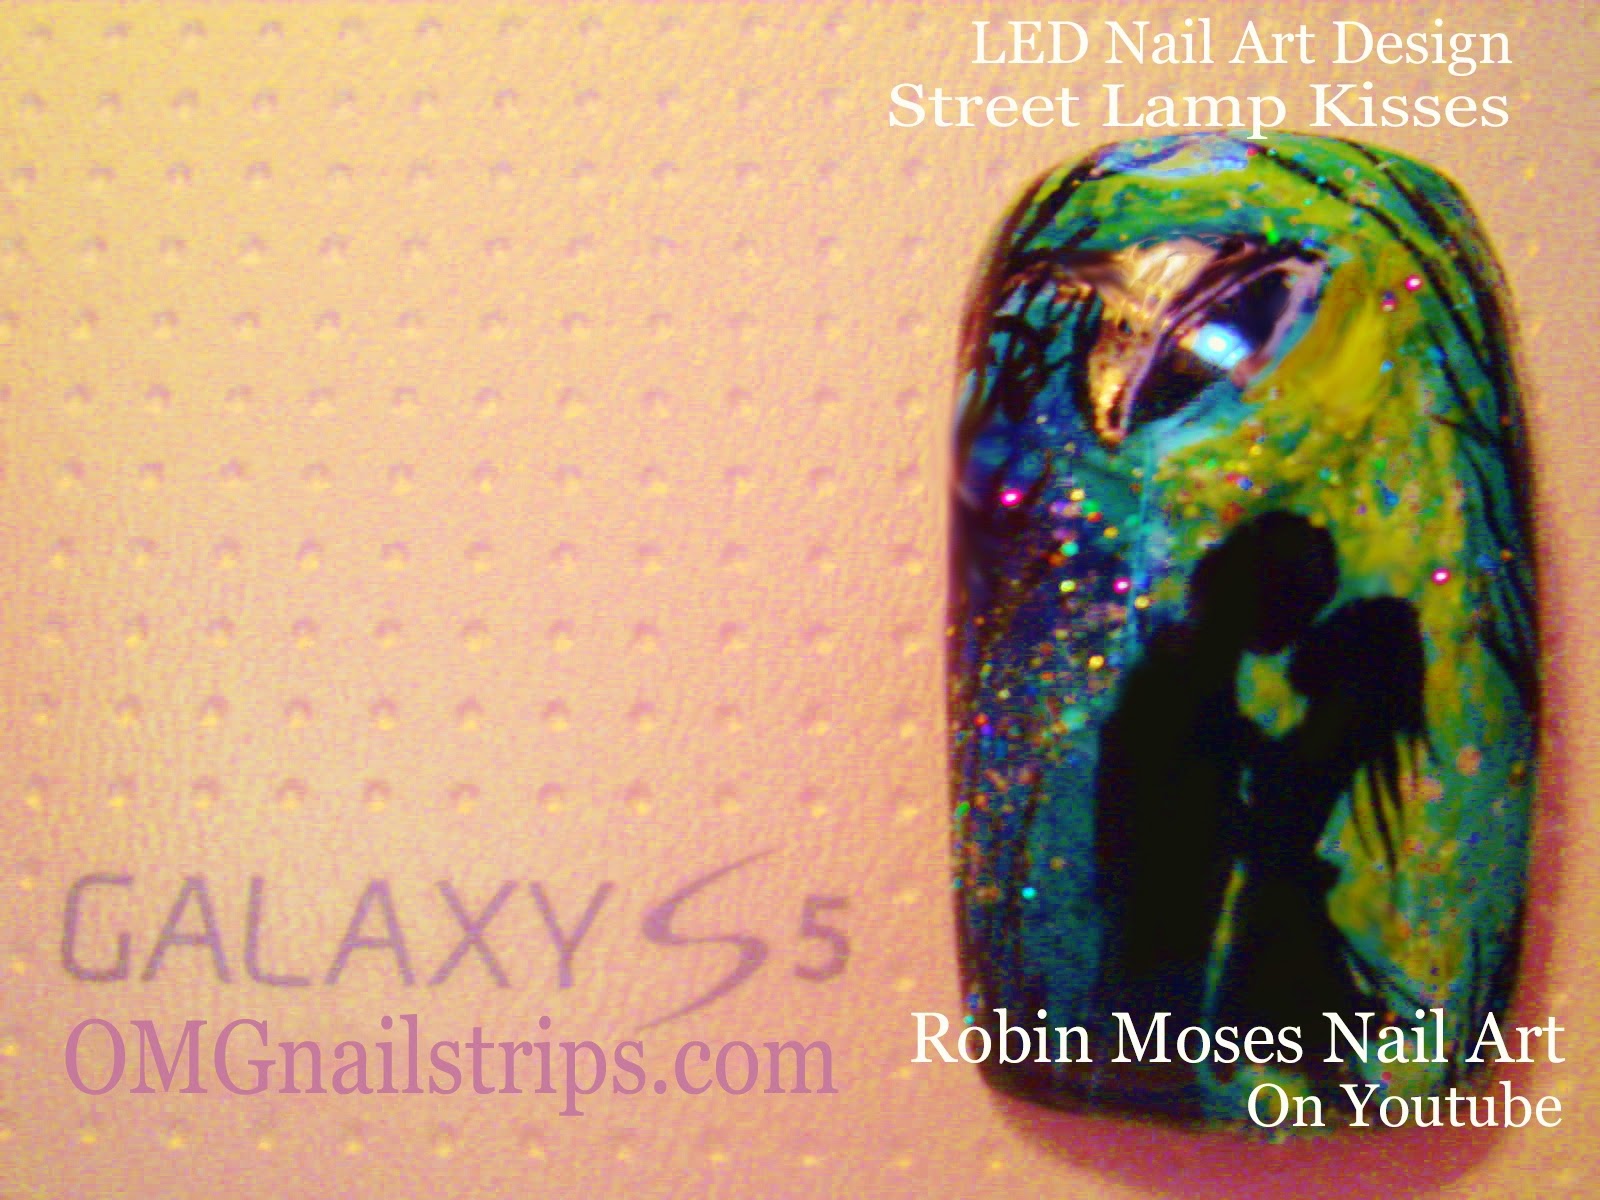 2. Nail Art LED Light - wide 4